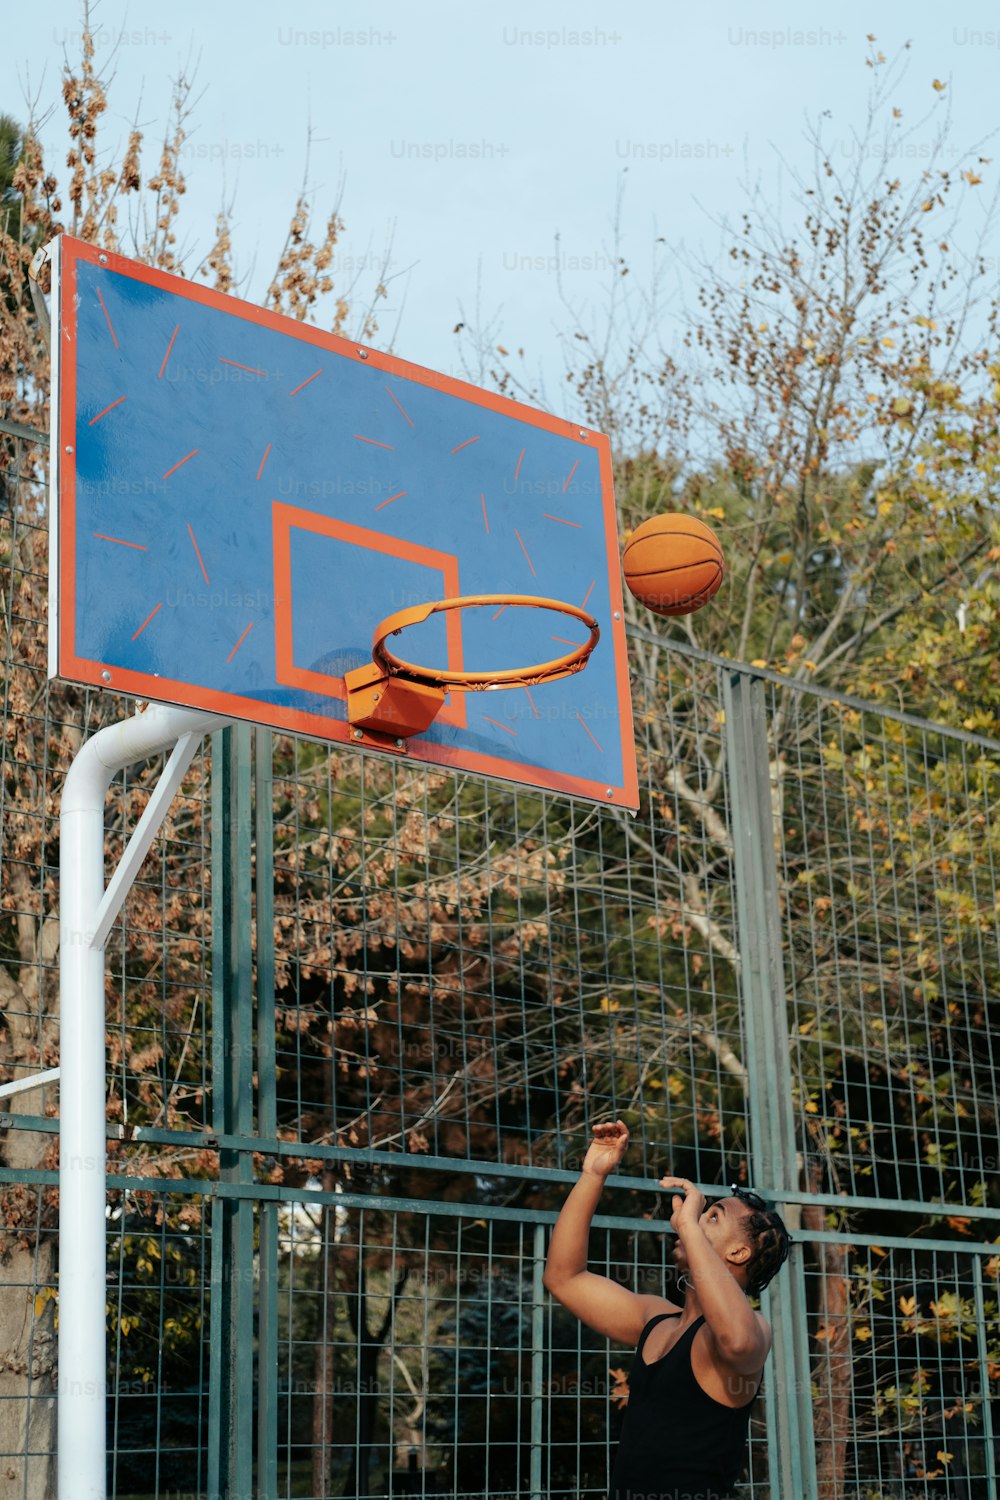 Un giovane sta giocando a basket su un campo